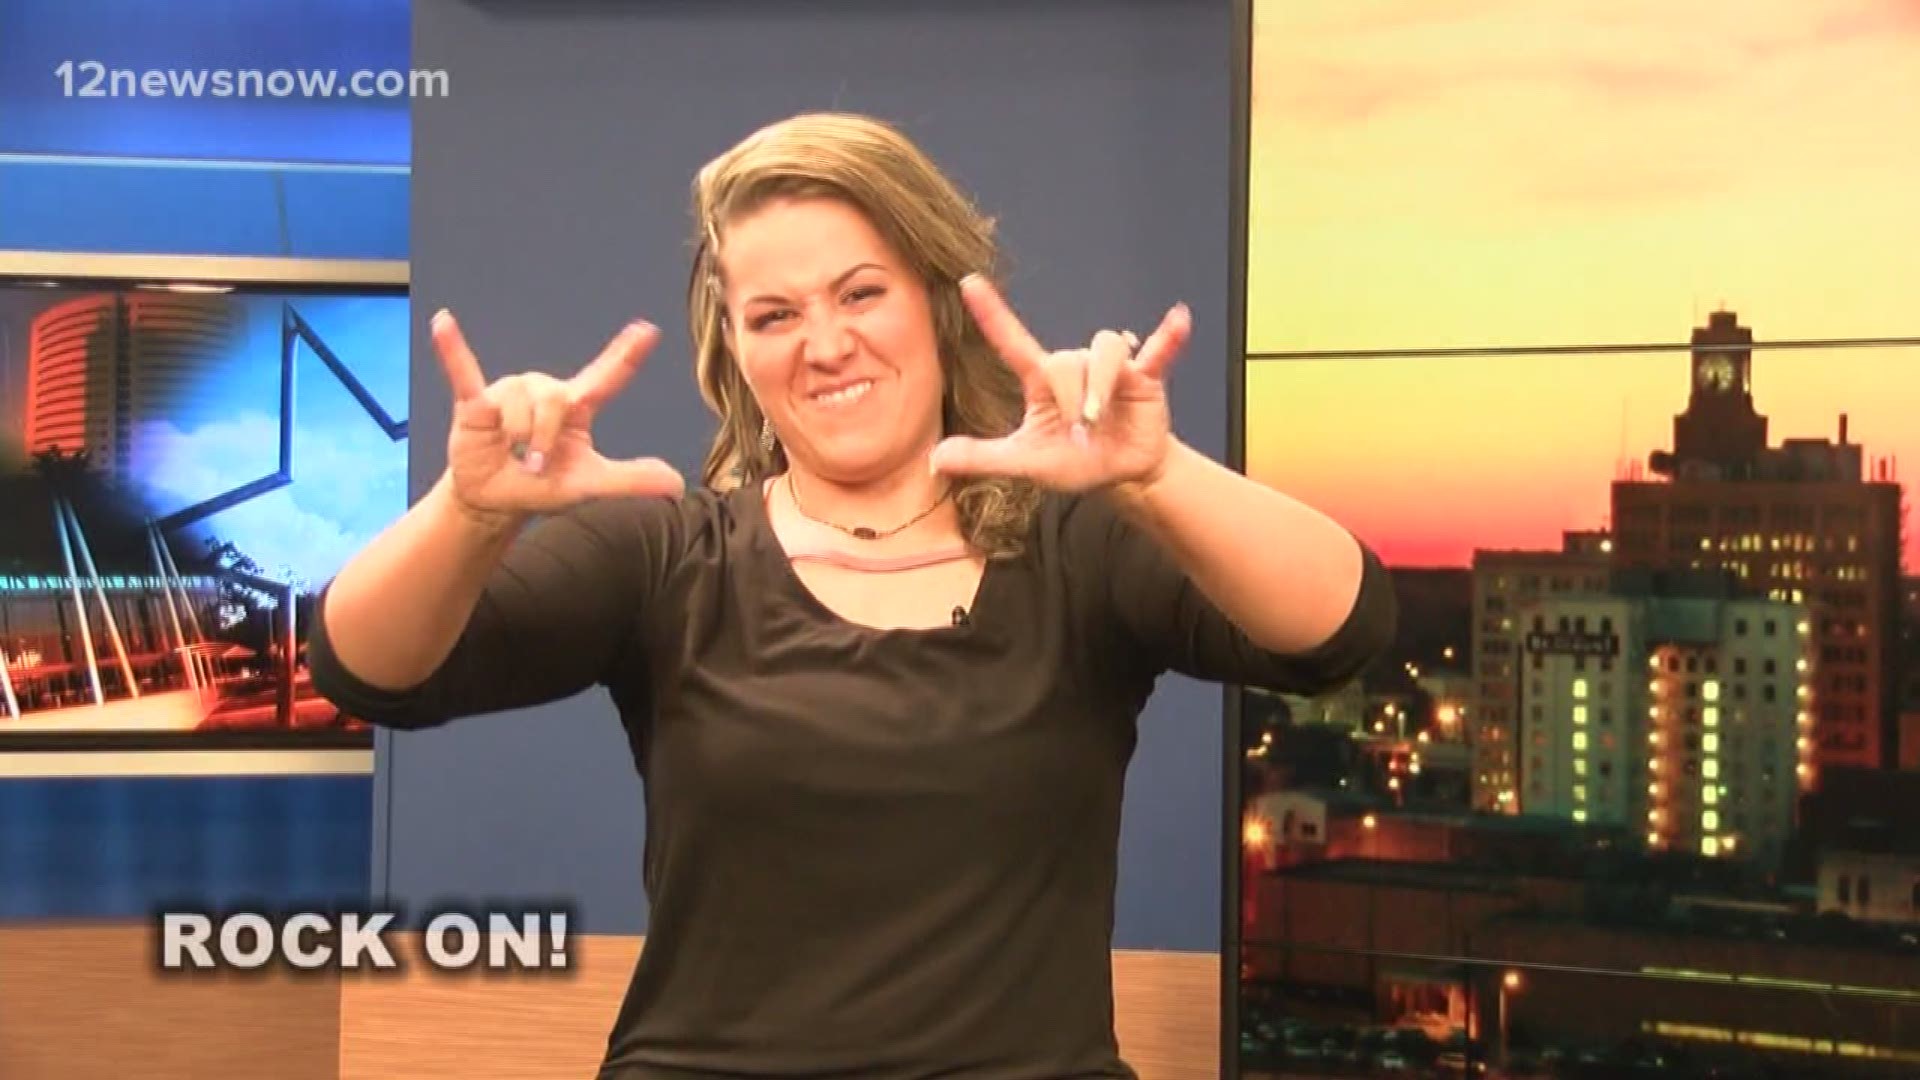 The Lumberton woman behind the viral sign language rock concert video